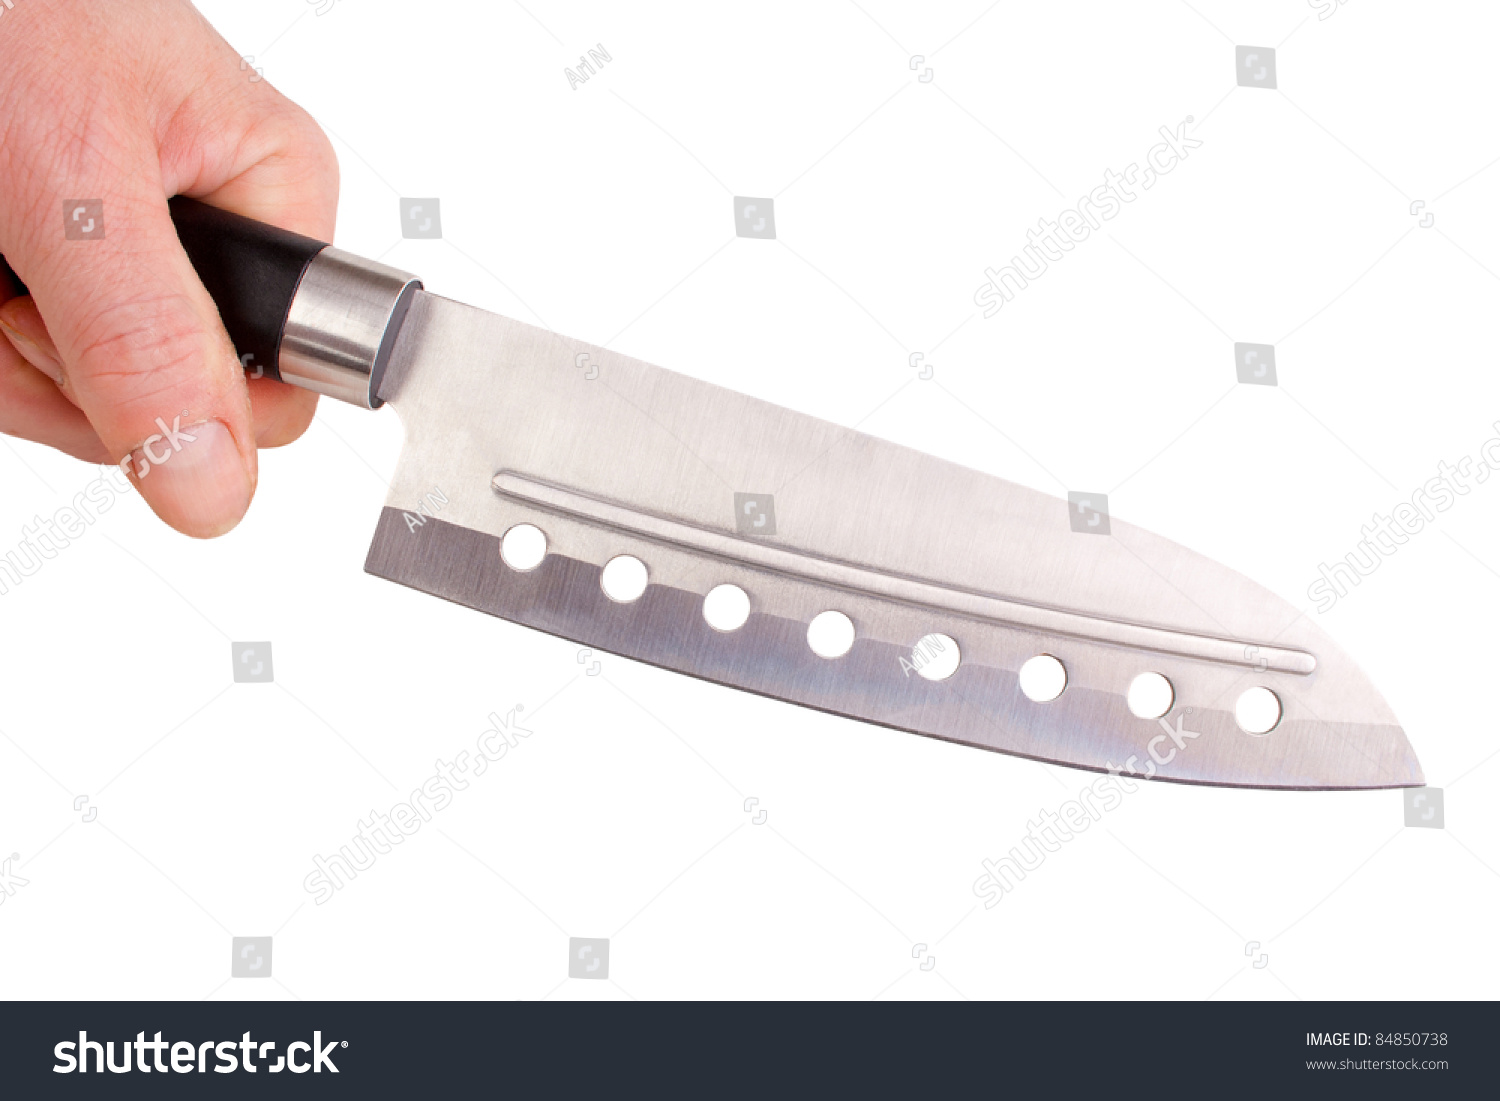 Нож с дырочками на лезвии